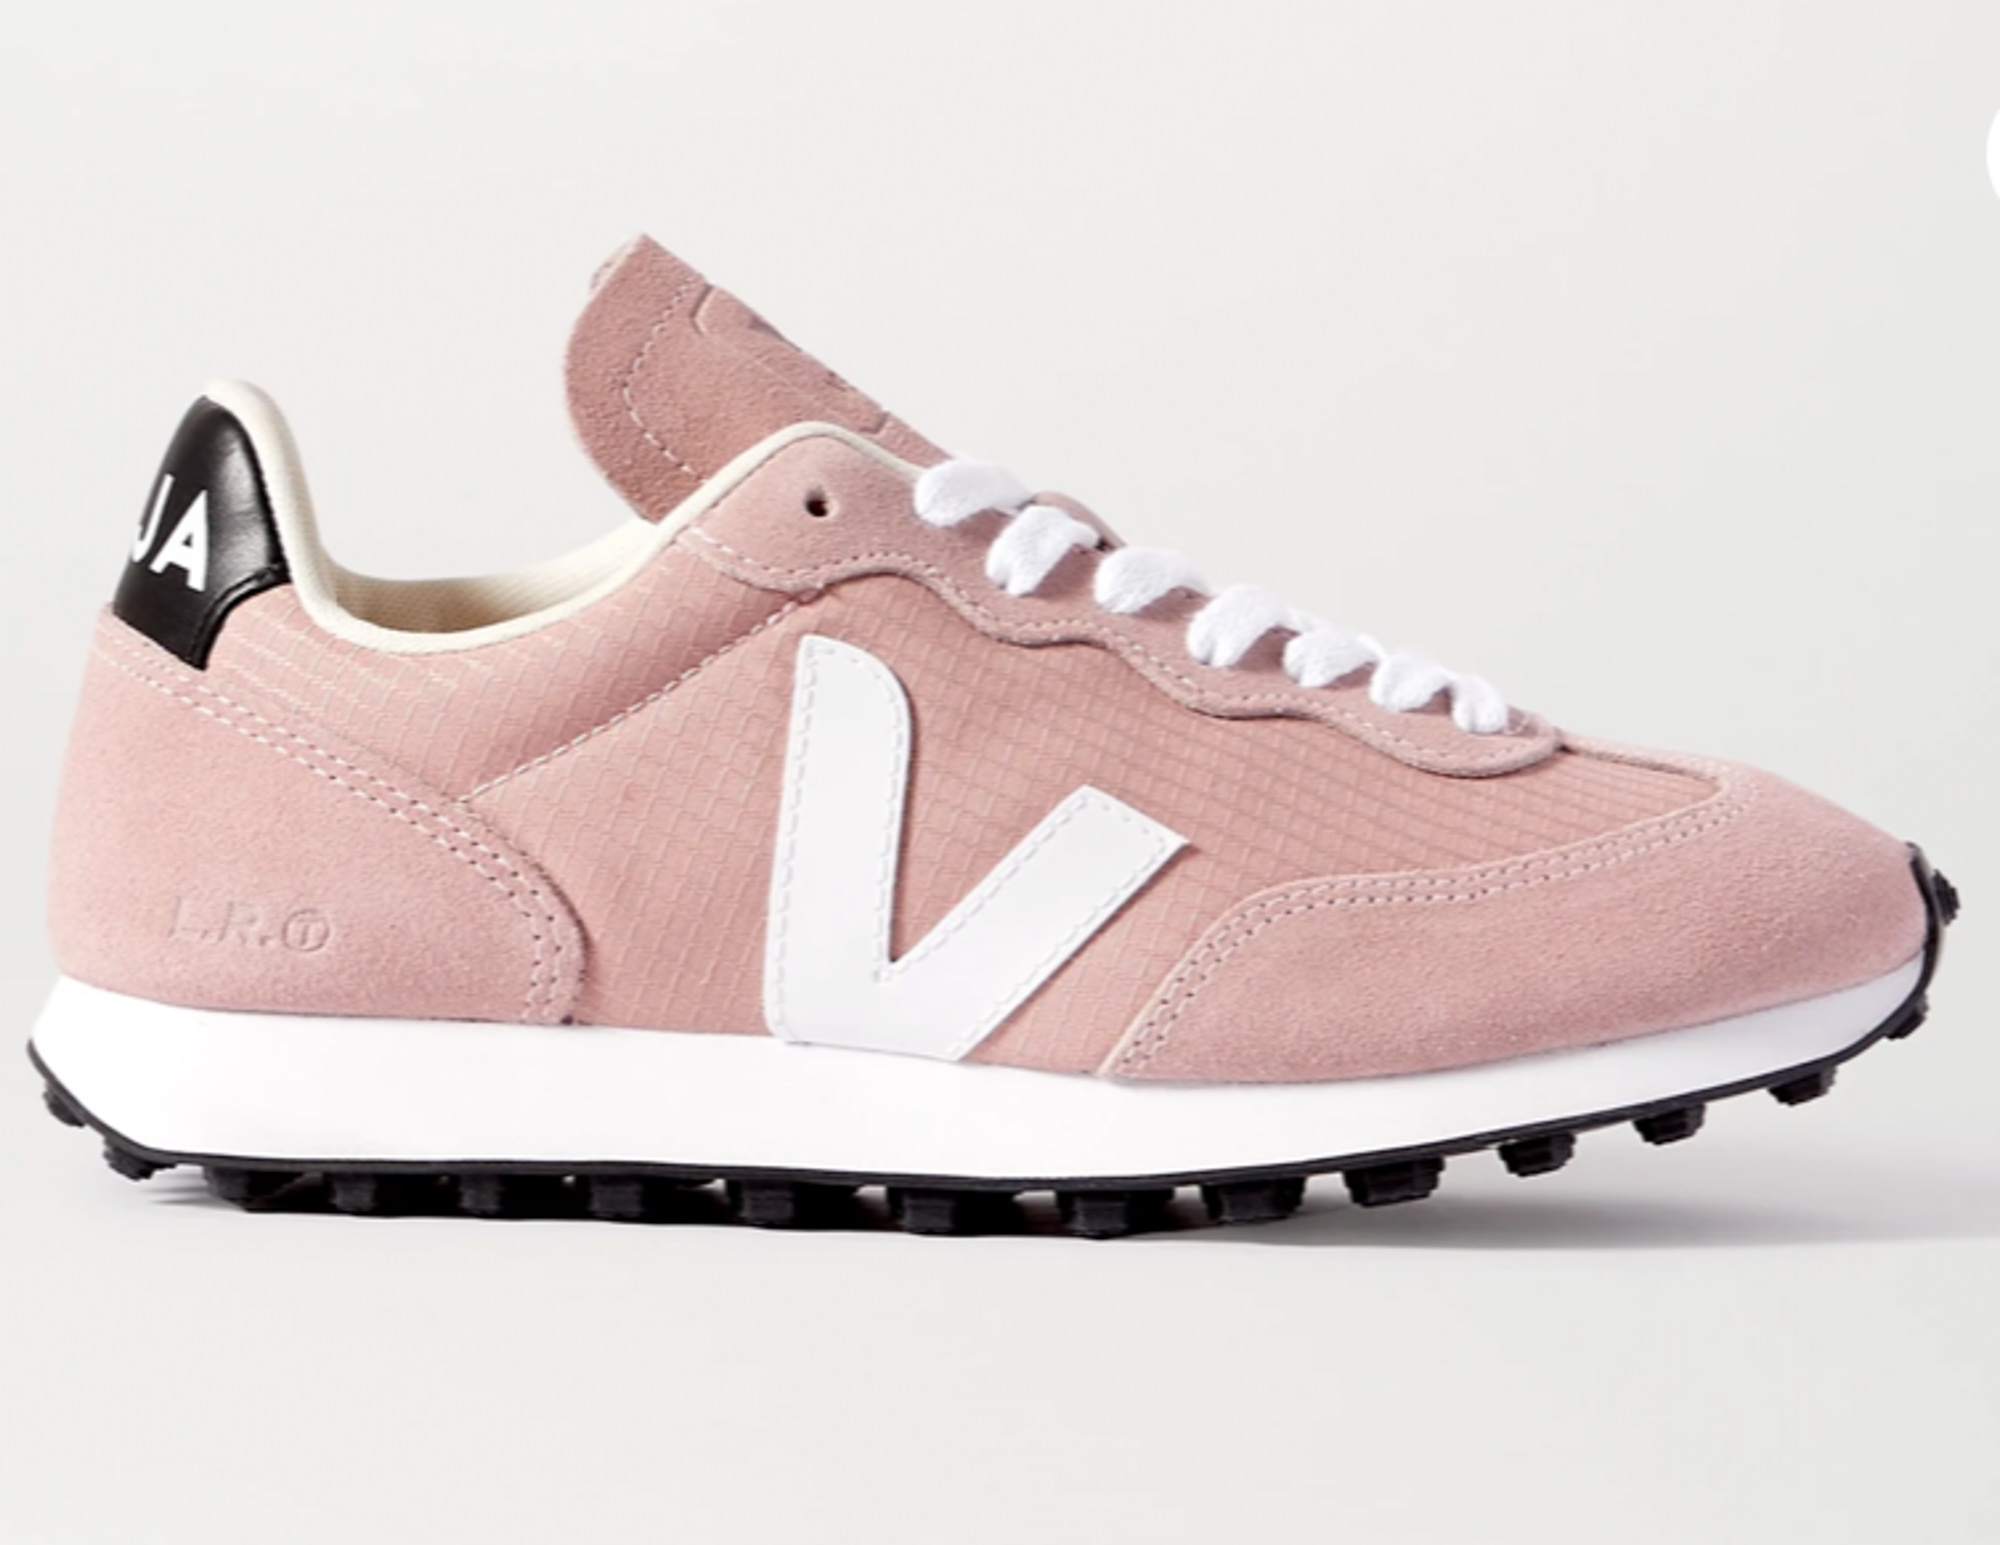 Veja retro sneakers in pink